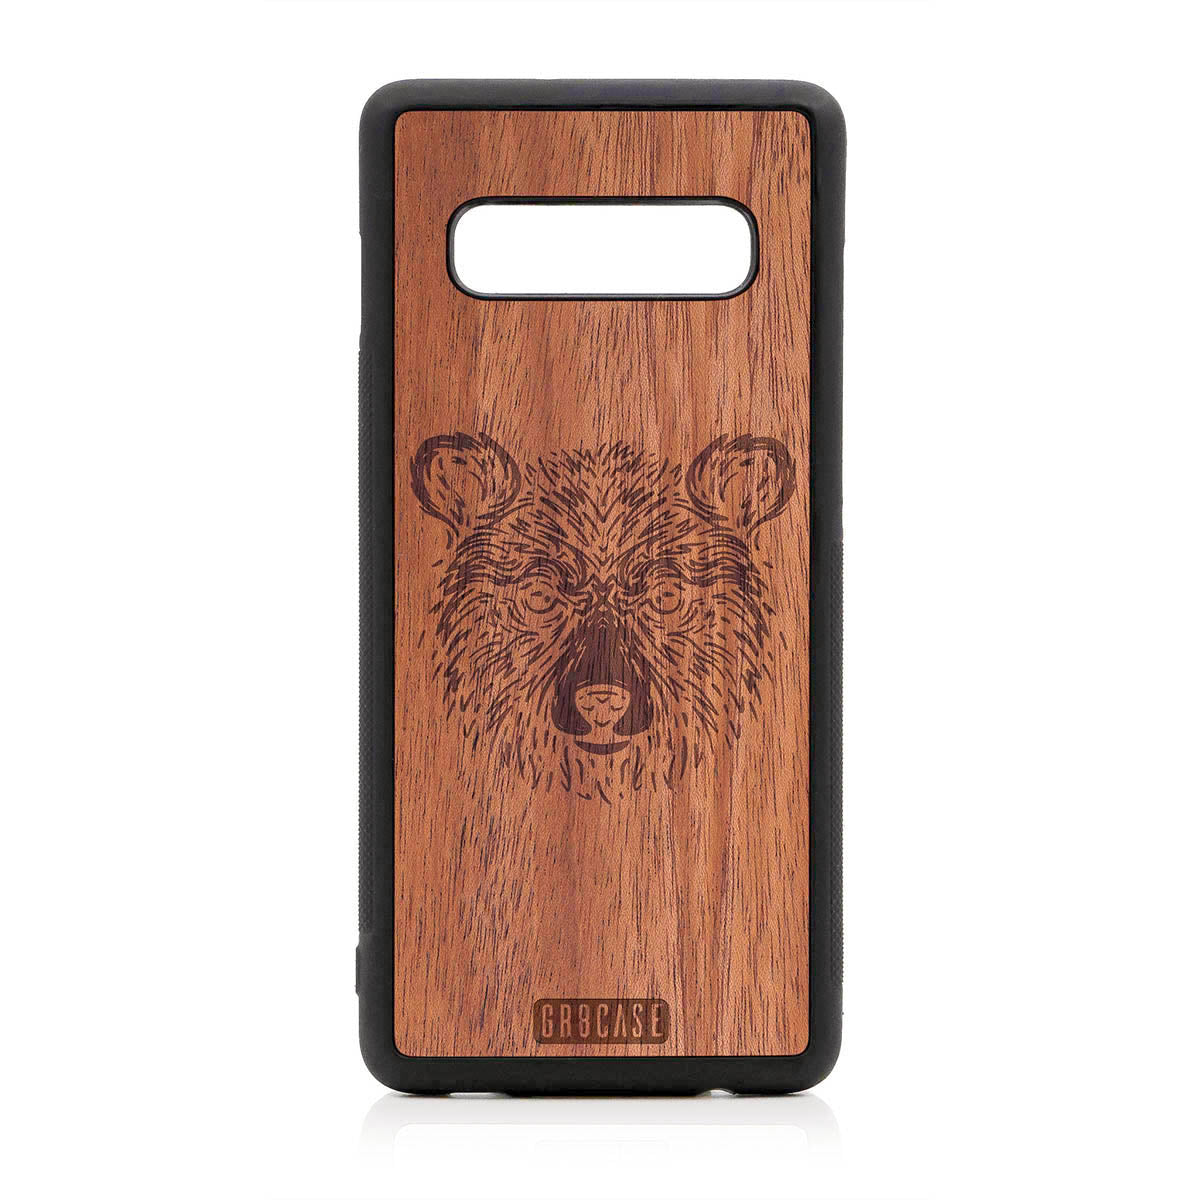 Furry Bear Design Wood Case For Samsung Galaxy S10 Plus